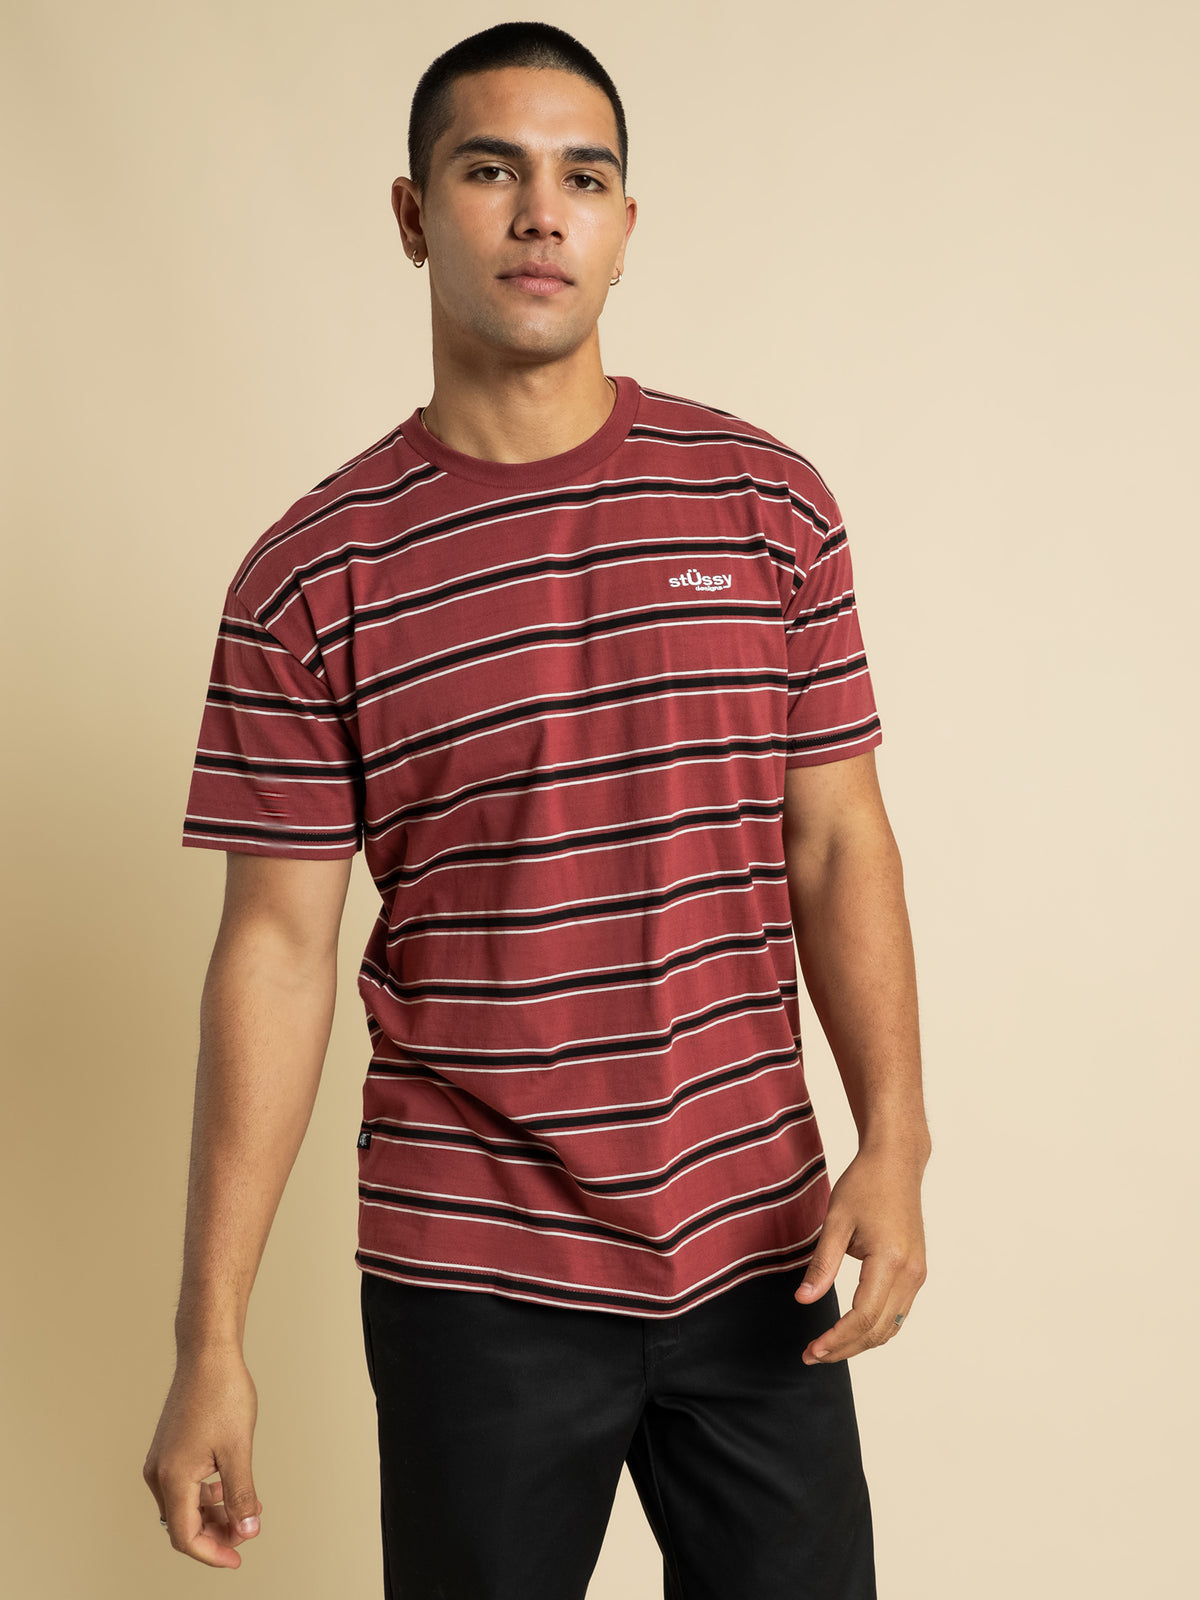 Glow Stripes T-Shirt in Mocha